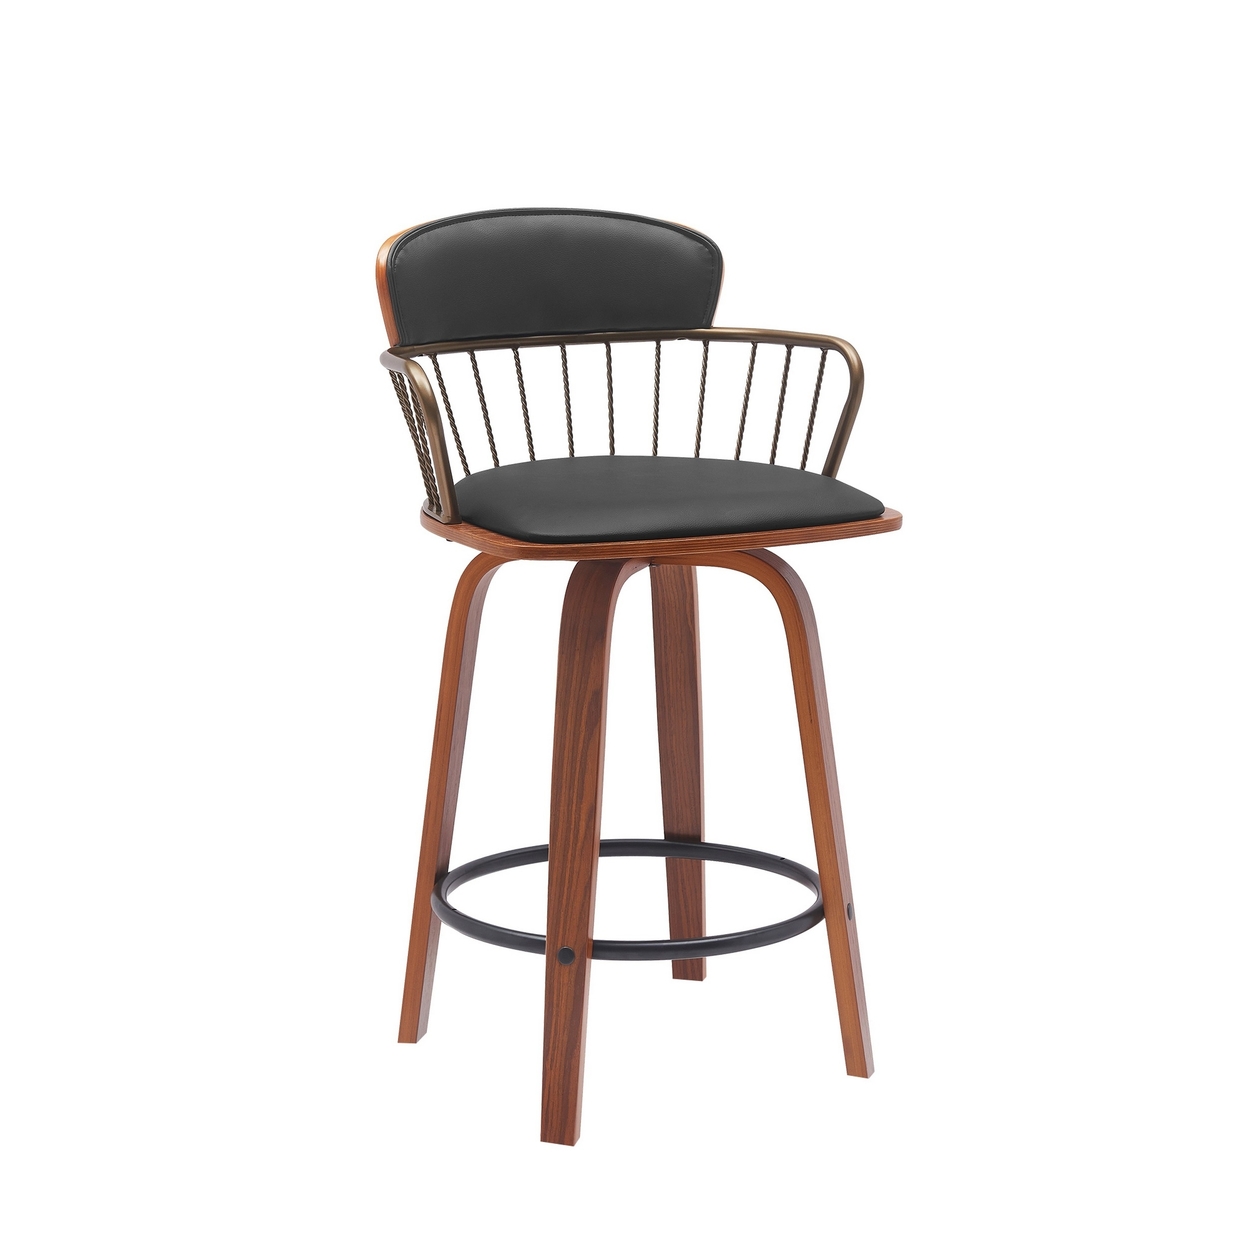 Wiz 26 Inch Counter Stool Chair, Slatted, Black Faux Leather, Walnut Brown - Saltoro Sherpi